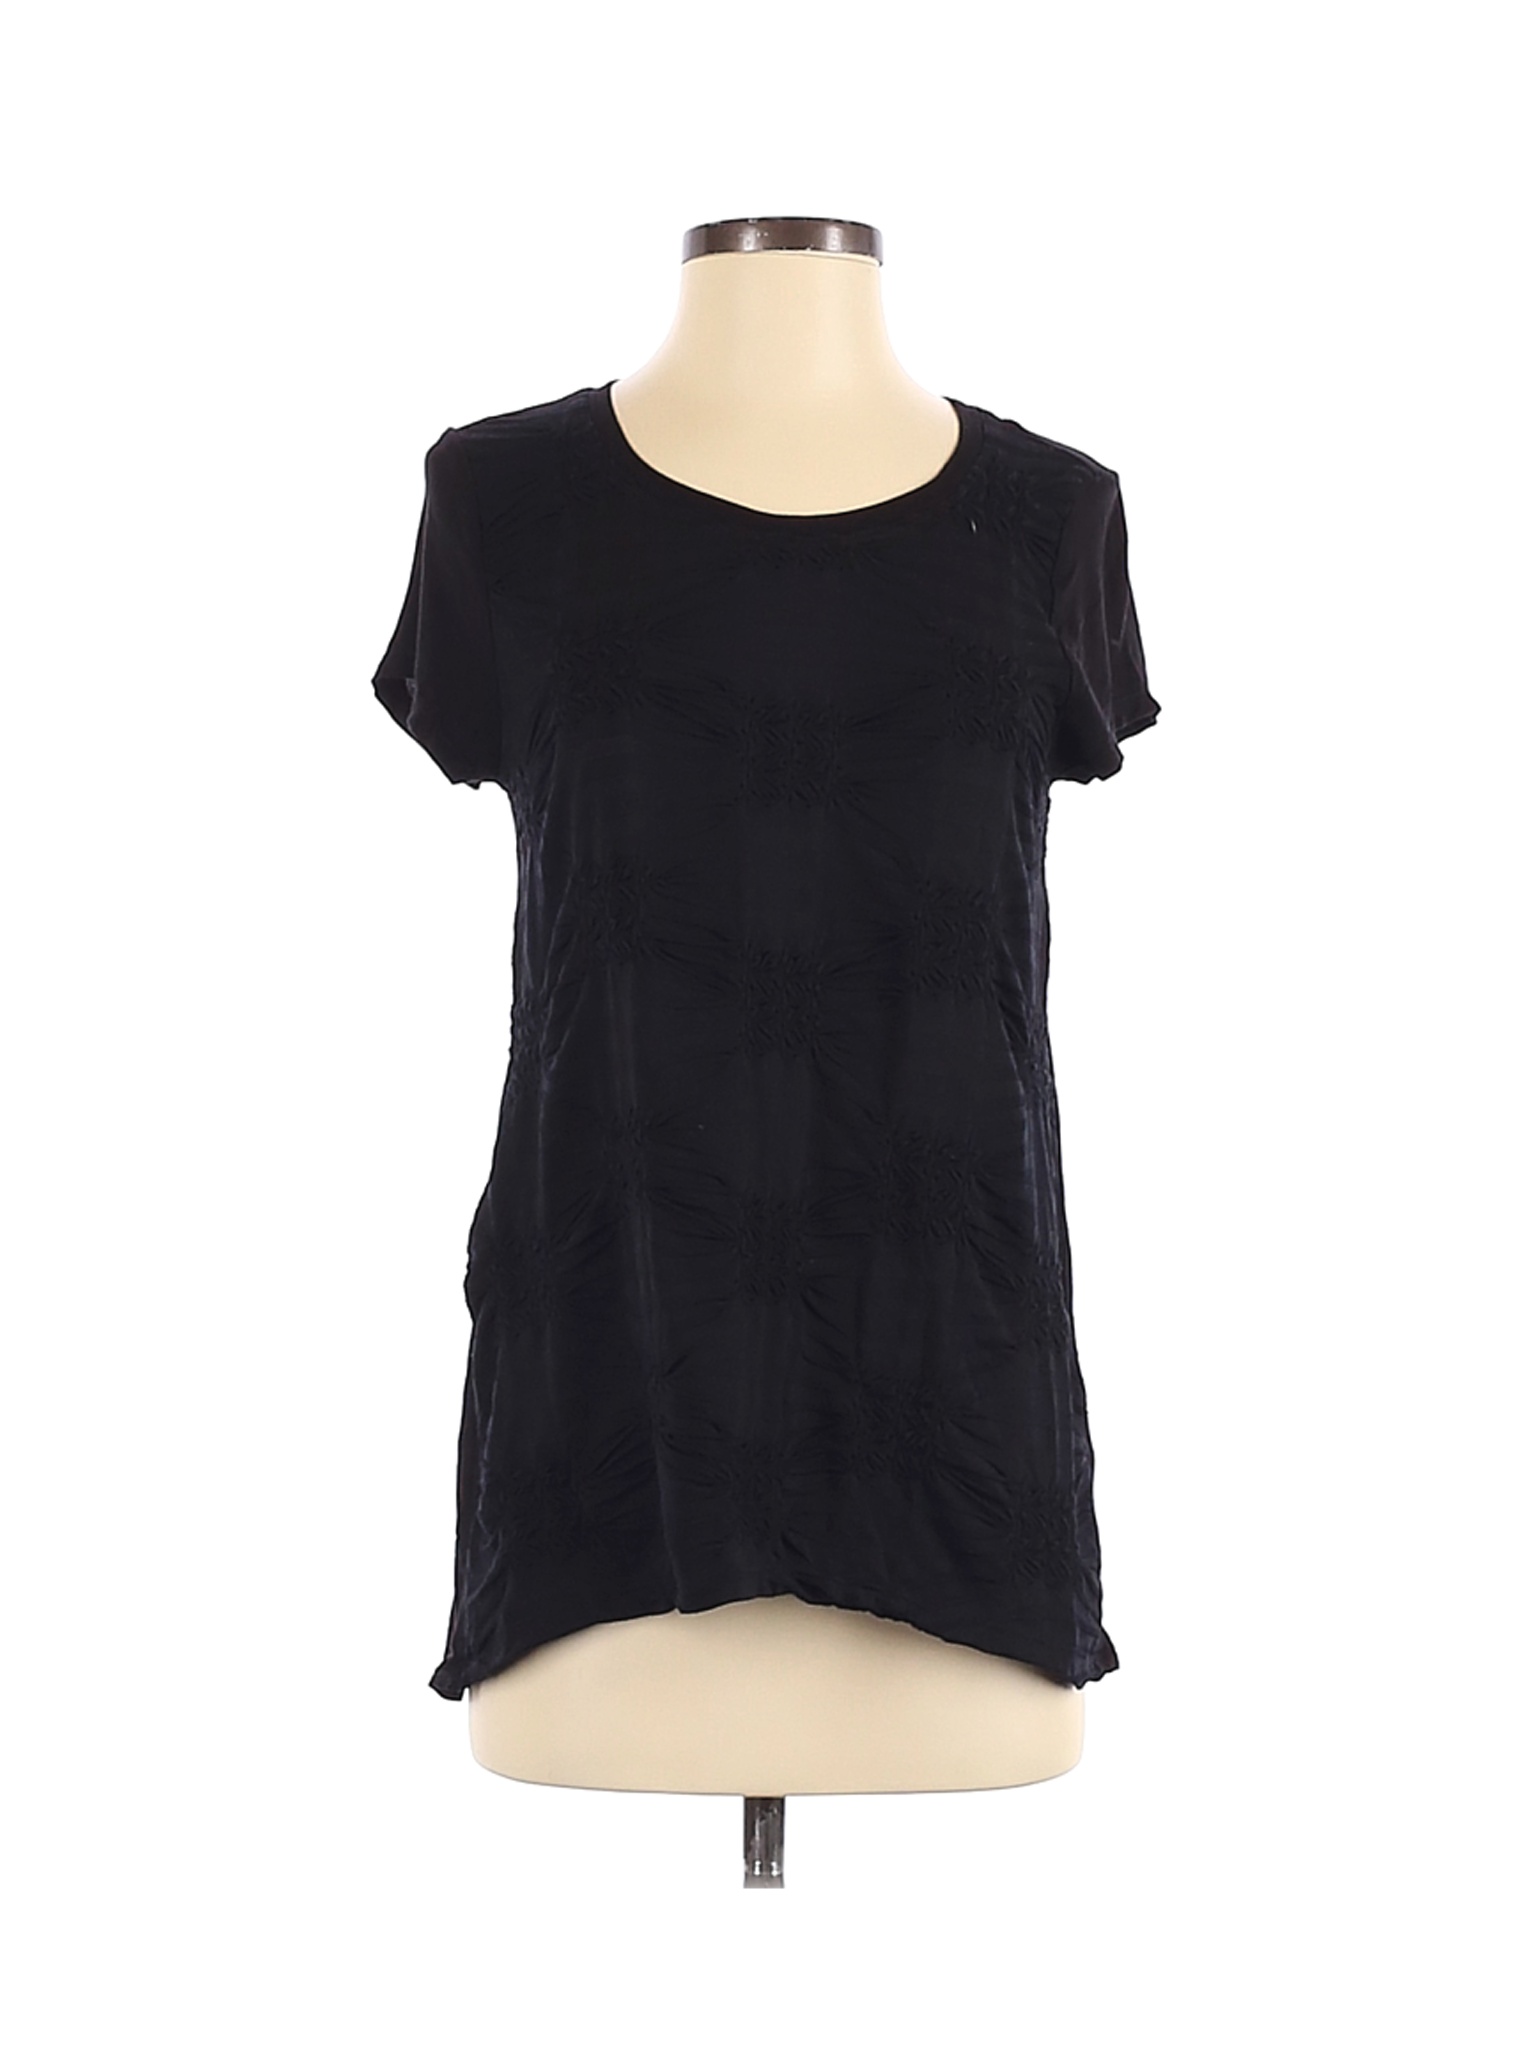 Cupio Women Black Short Sleeve T-Shirt S | eBay